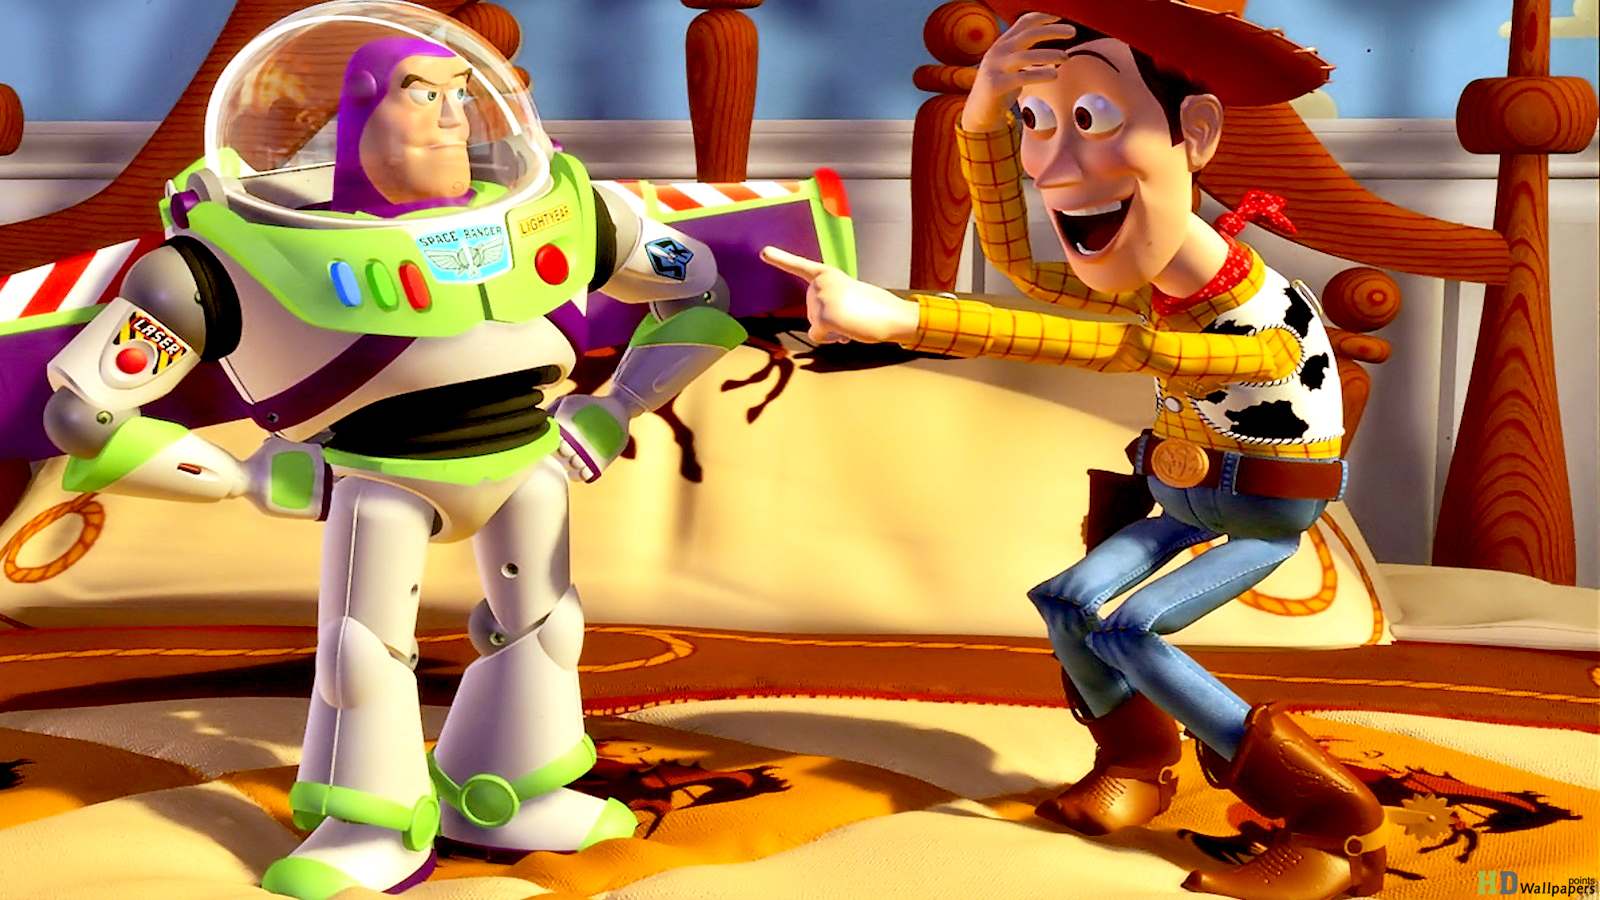  Buzz Lightyear and Woody Disney Desktop Wallpapers Buzz Lightyear And